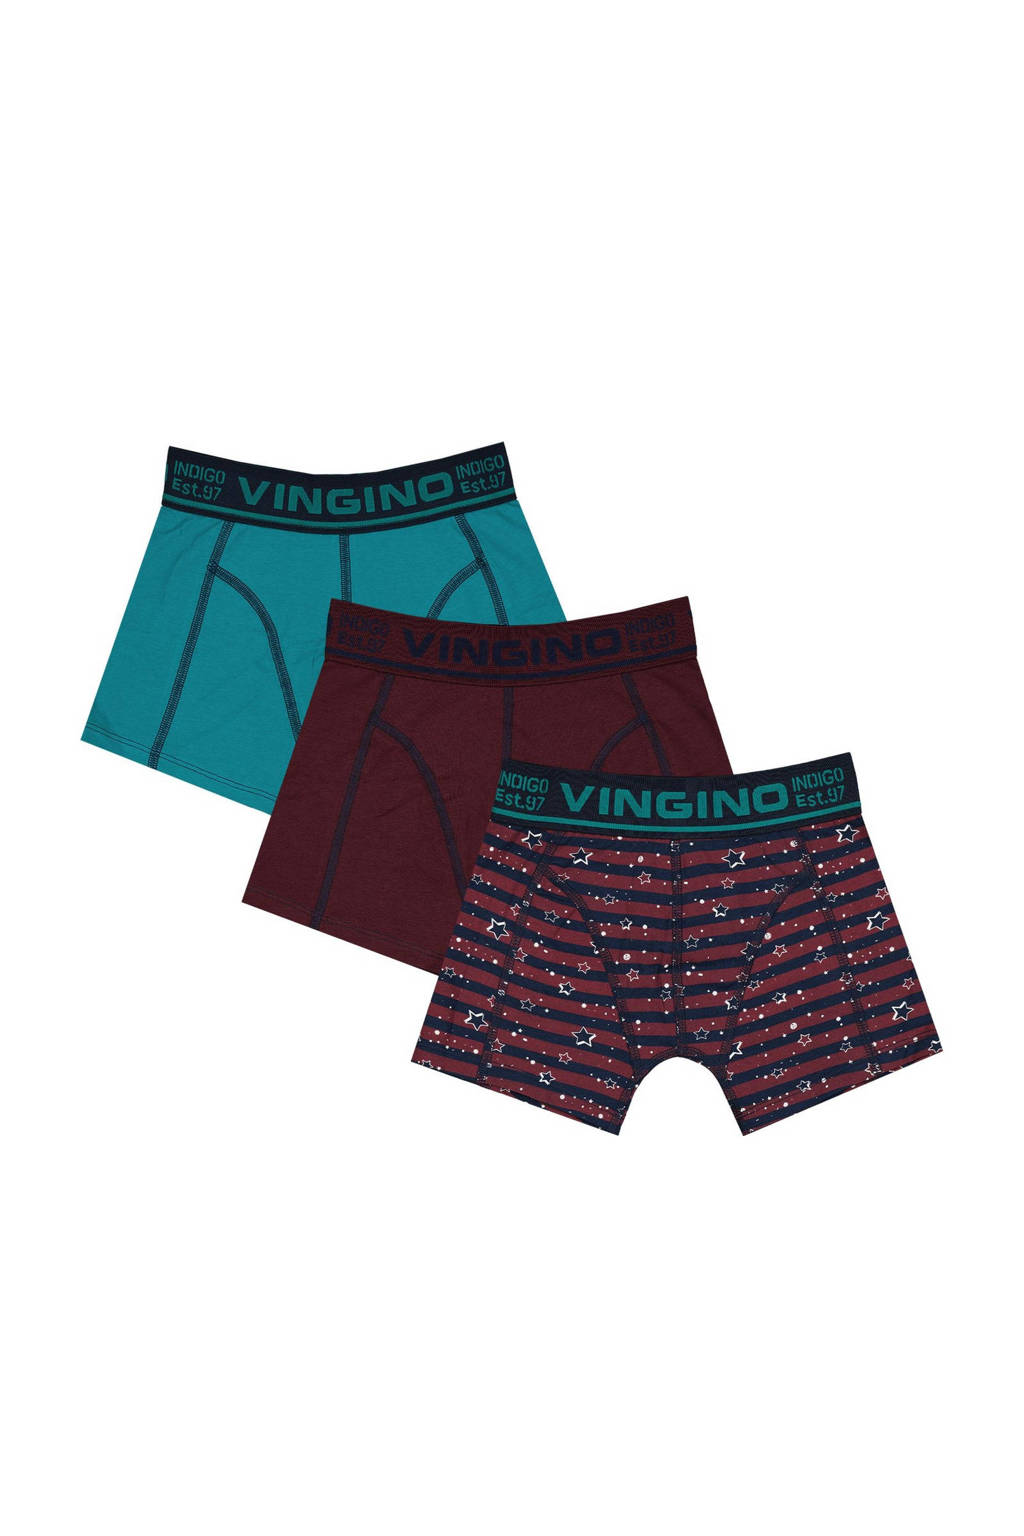 Vingino   boxershort Star Special - set van 3 blauw/bordeaux, Blauw/bordeaux